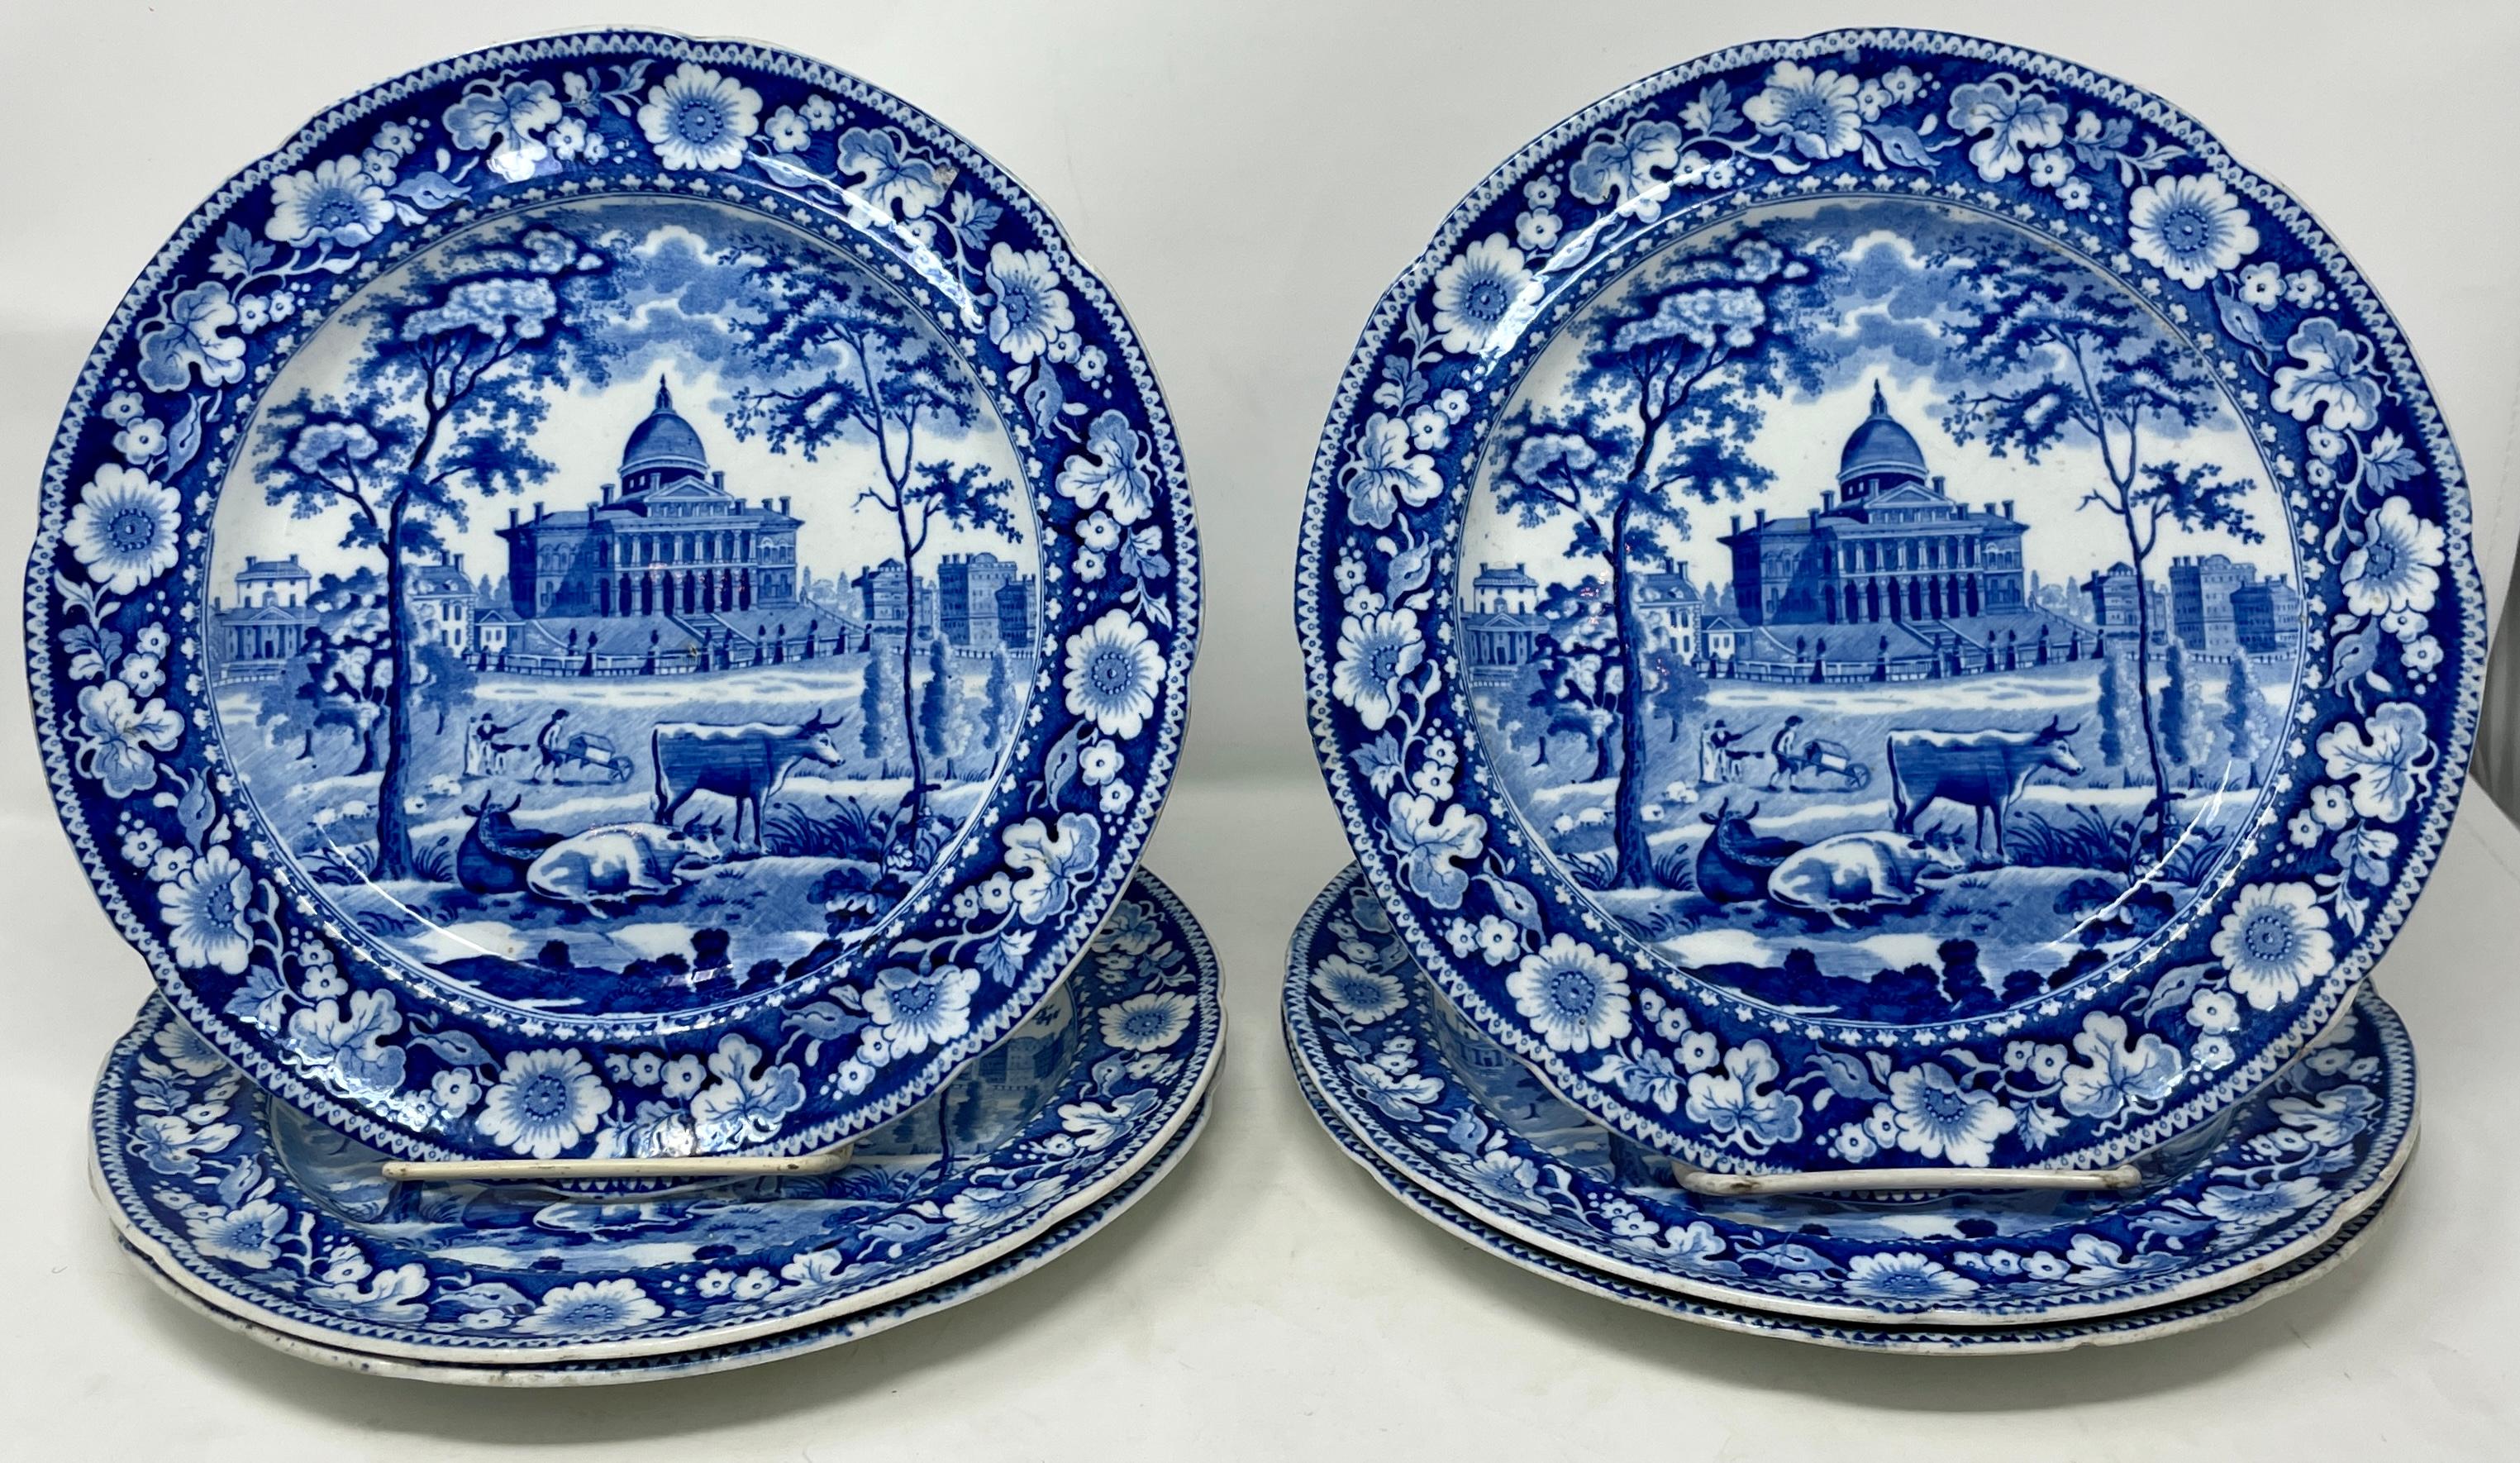 Set of six antique 19th century english blue and white porcelain plates.